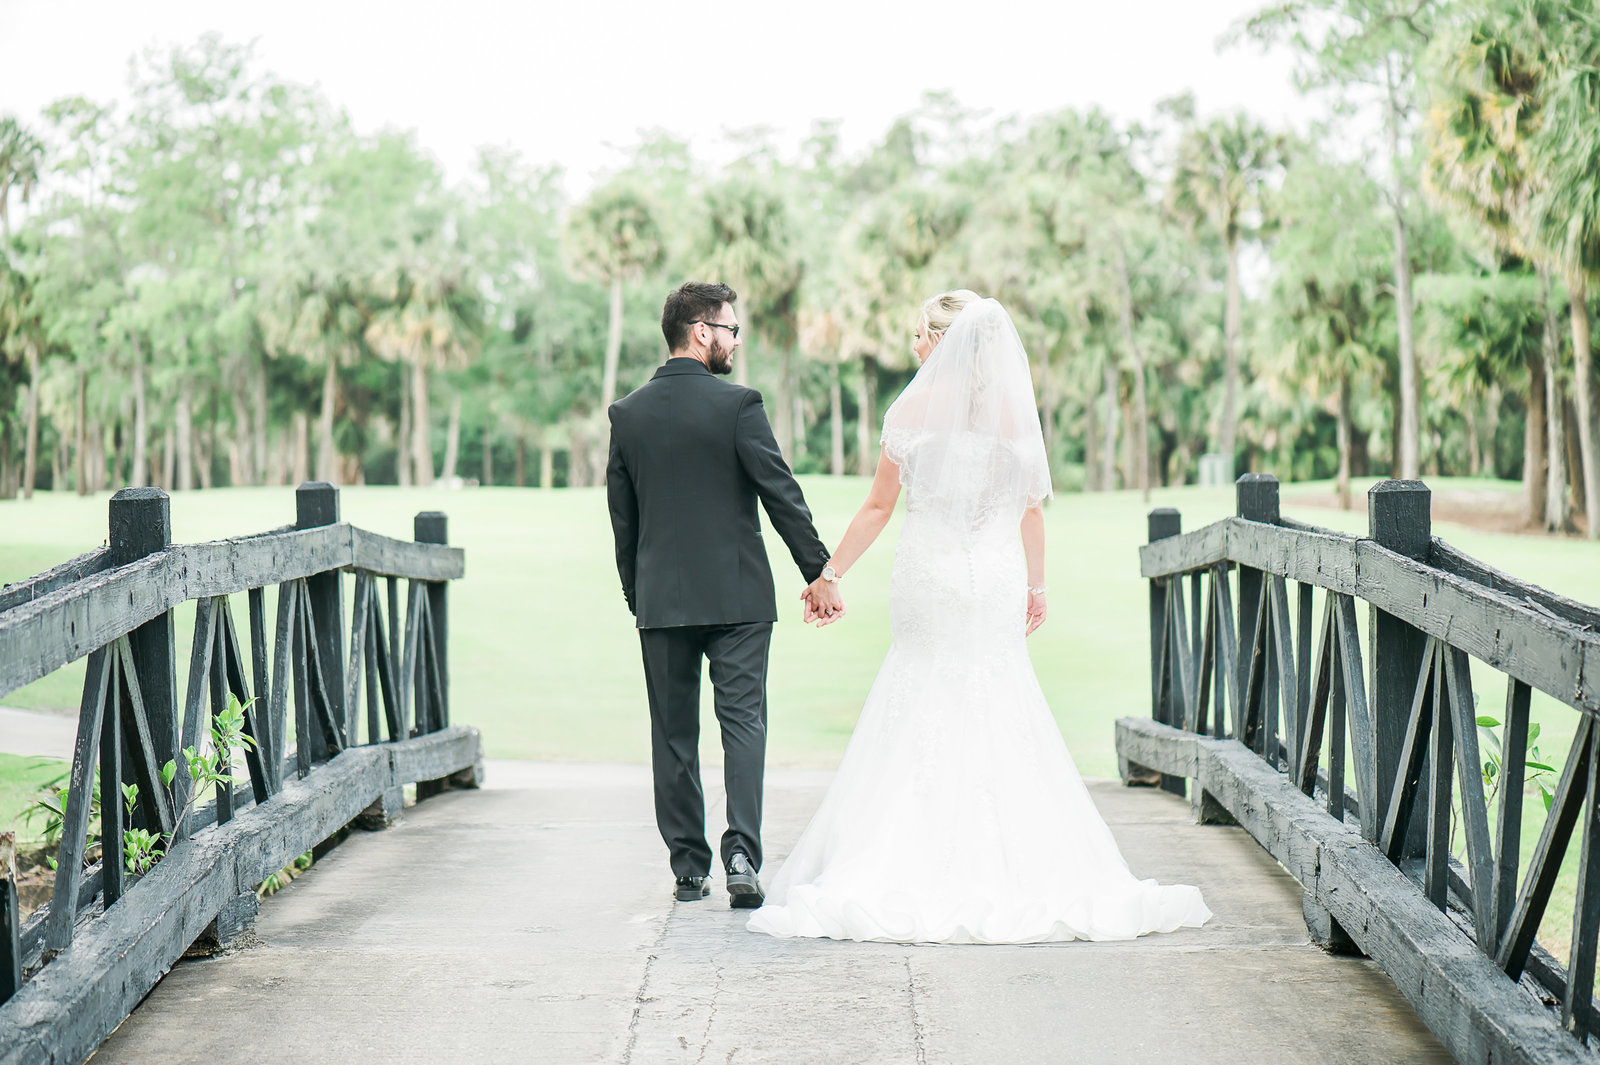 Rustic Wedding - Myacoo Country Club Wedding - Palm Beach Wedding Photography by Palm Beach Photography, Inc.